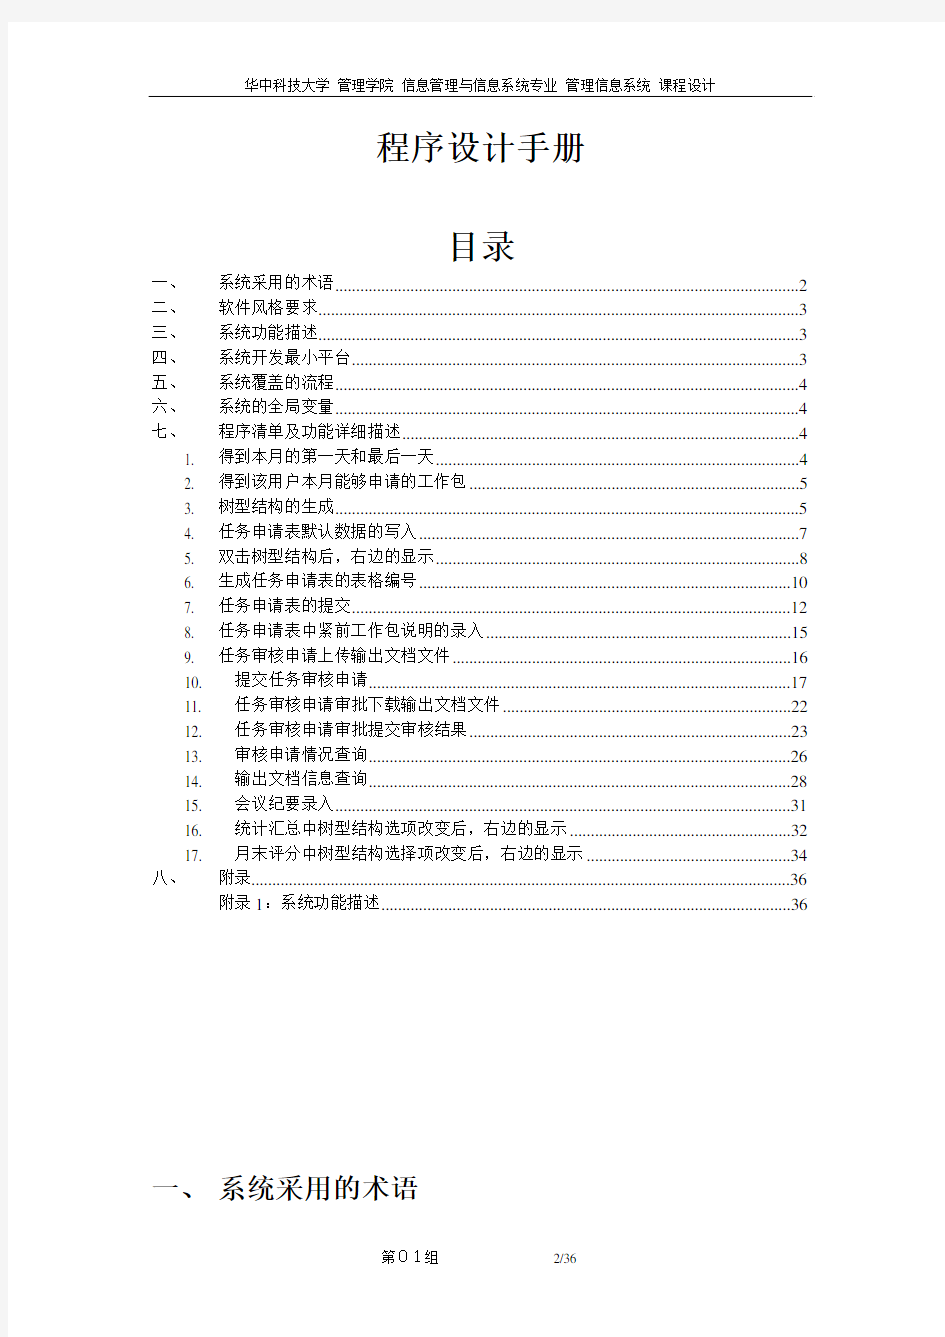 zhangxing2008-0627160东风汽车公司技术中心任务管理系统-程序设计手册